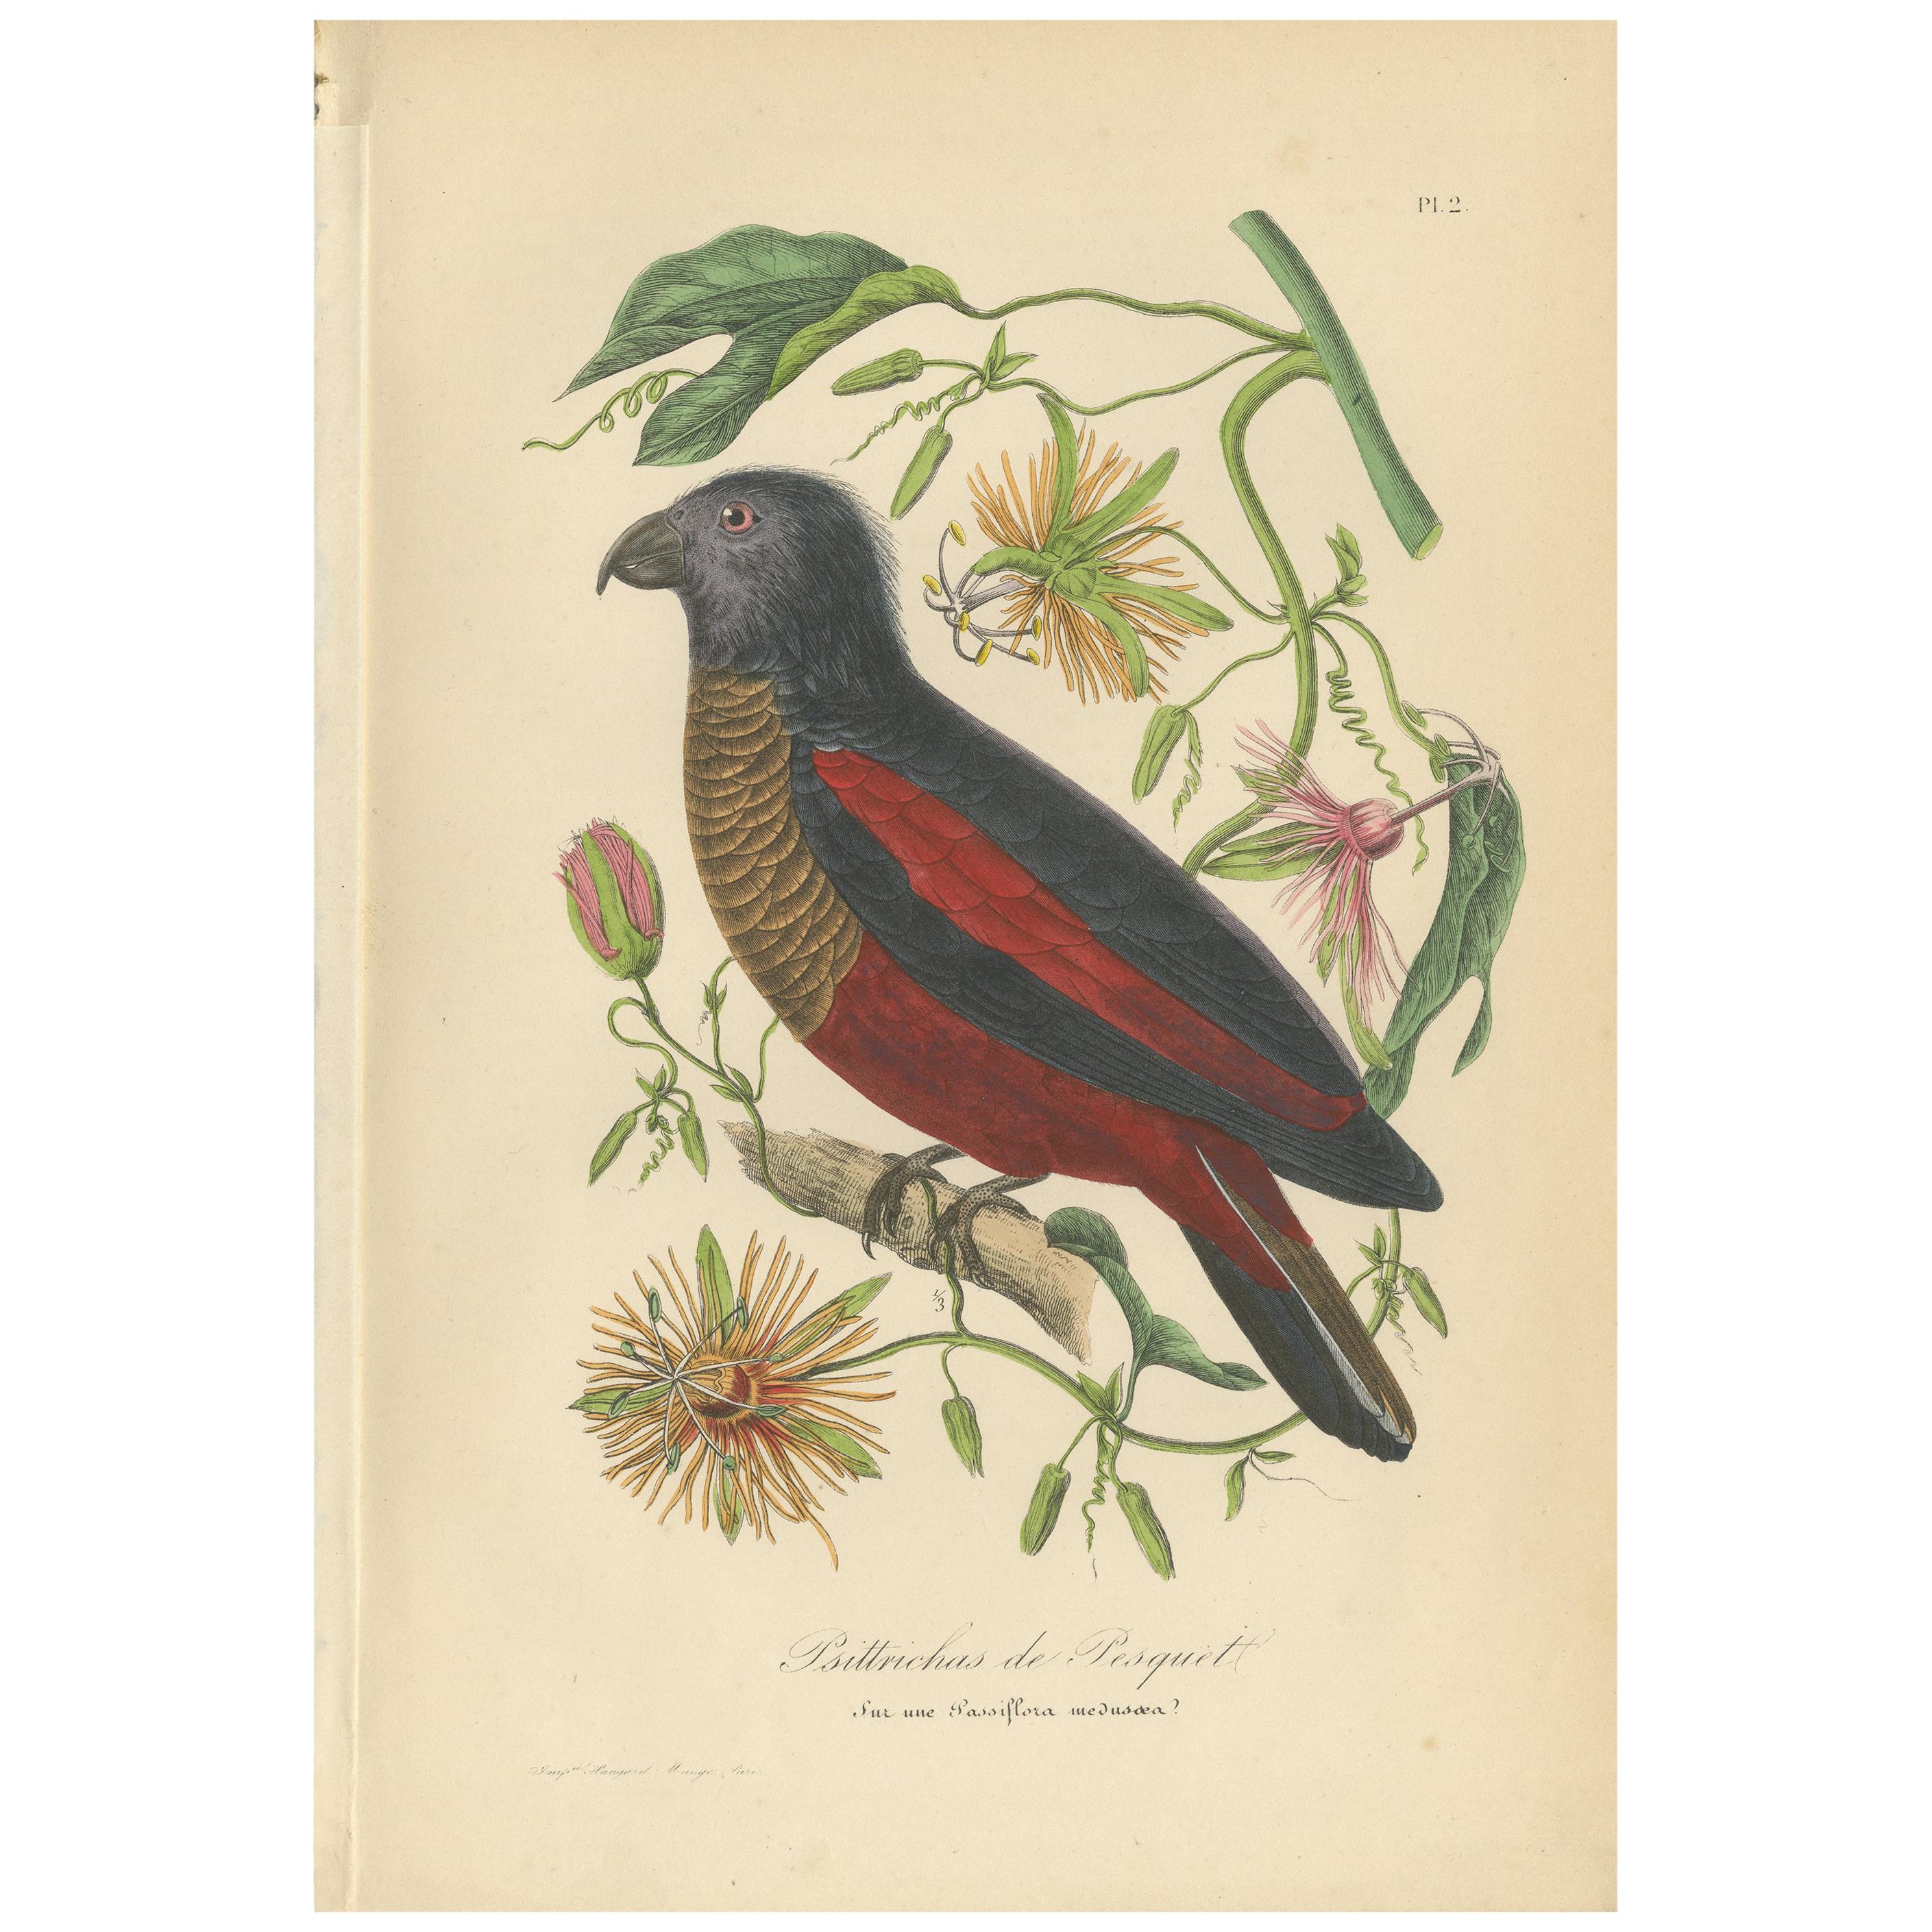 Antique Bird Print of a Pesquet's Parrot, hand-colored, 1853